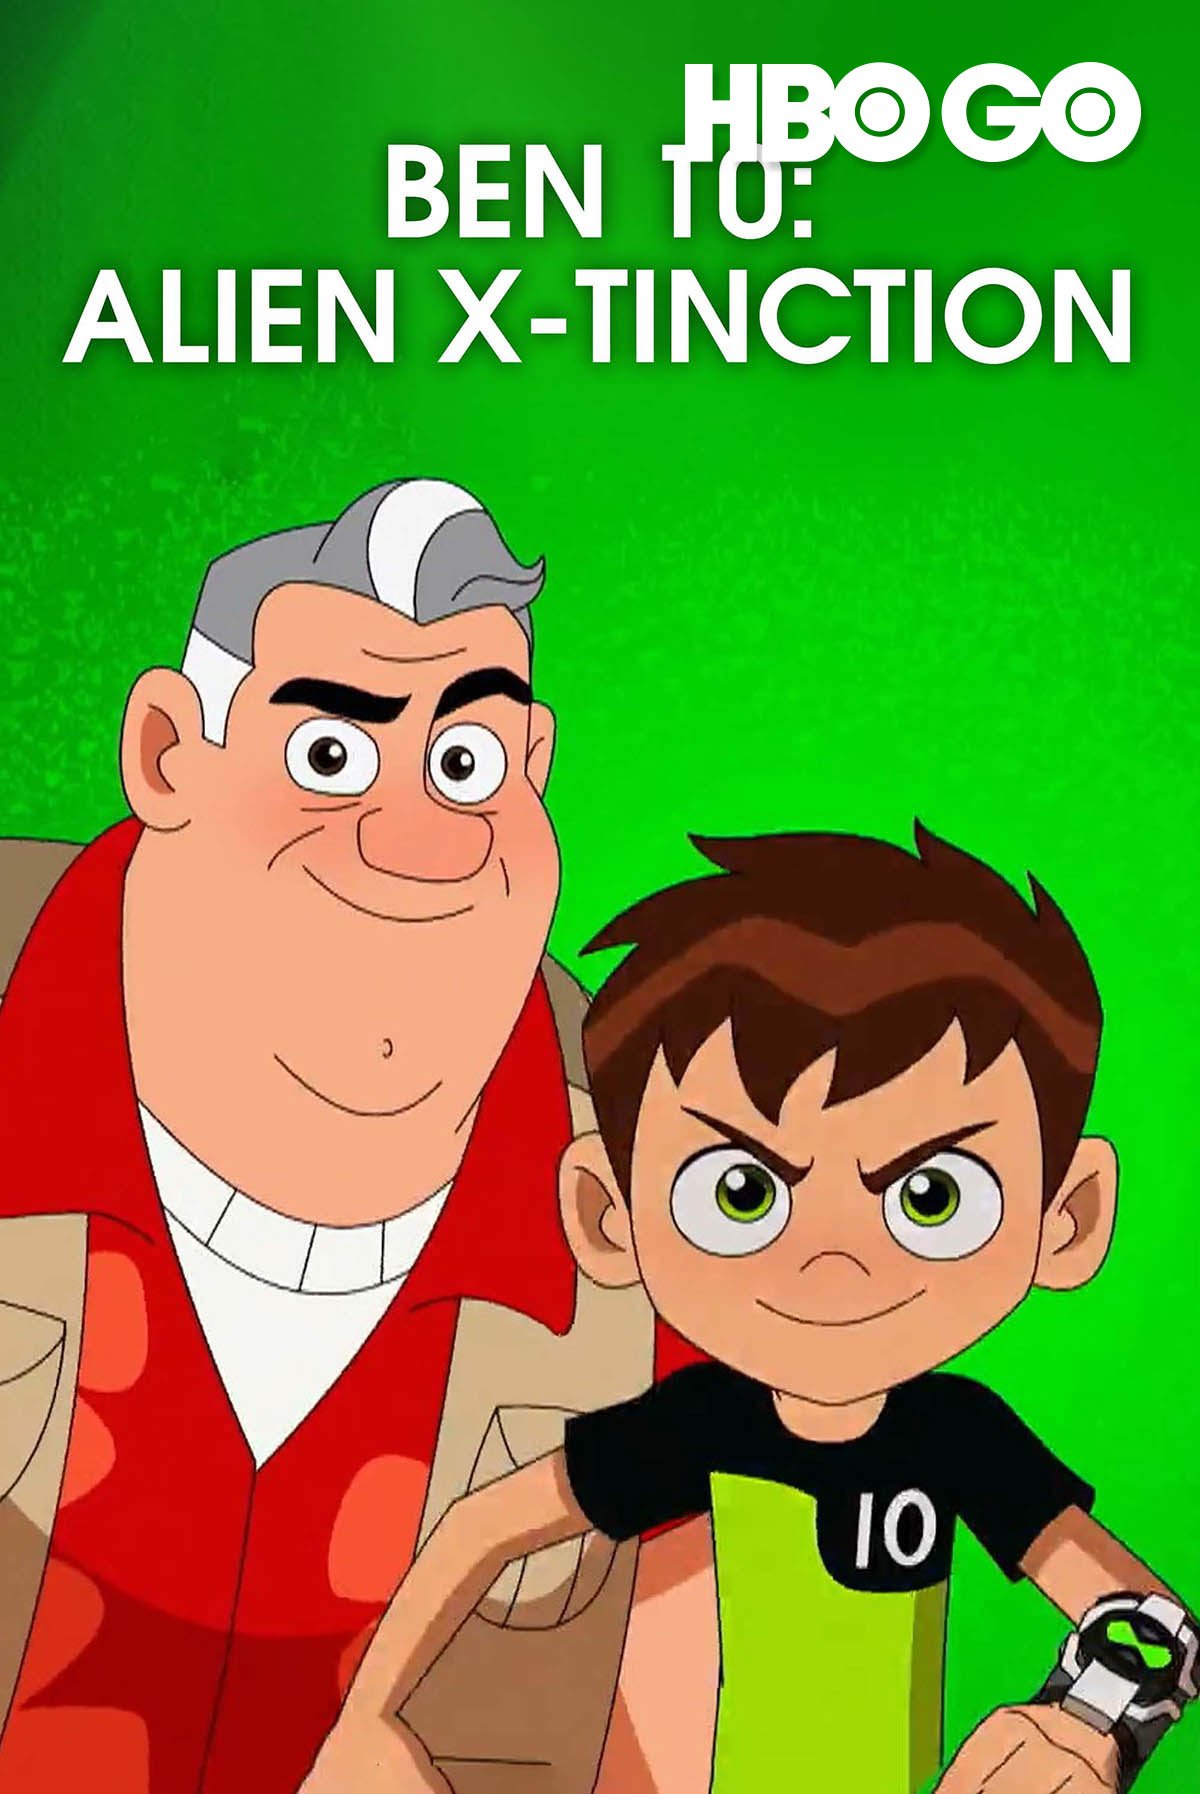 Ben 10 Alien X-tinction (TV Episode 2021) - Ratings - IMDb